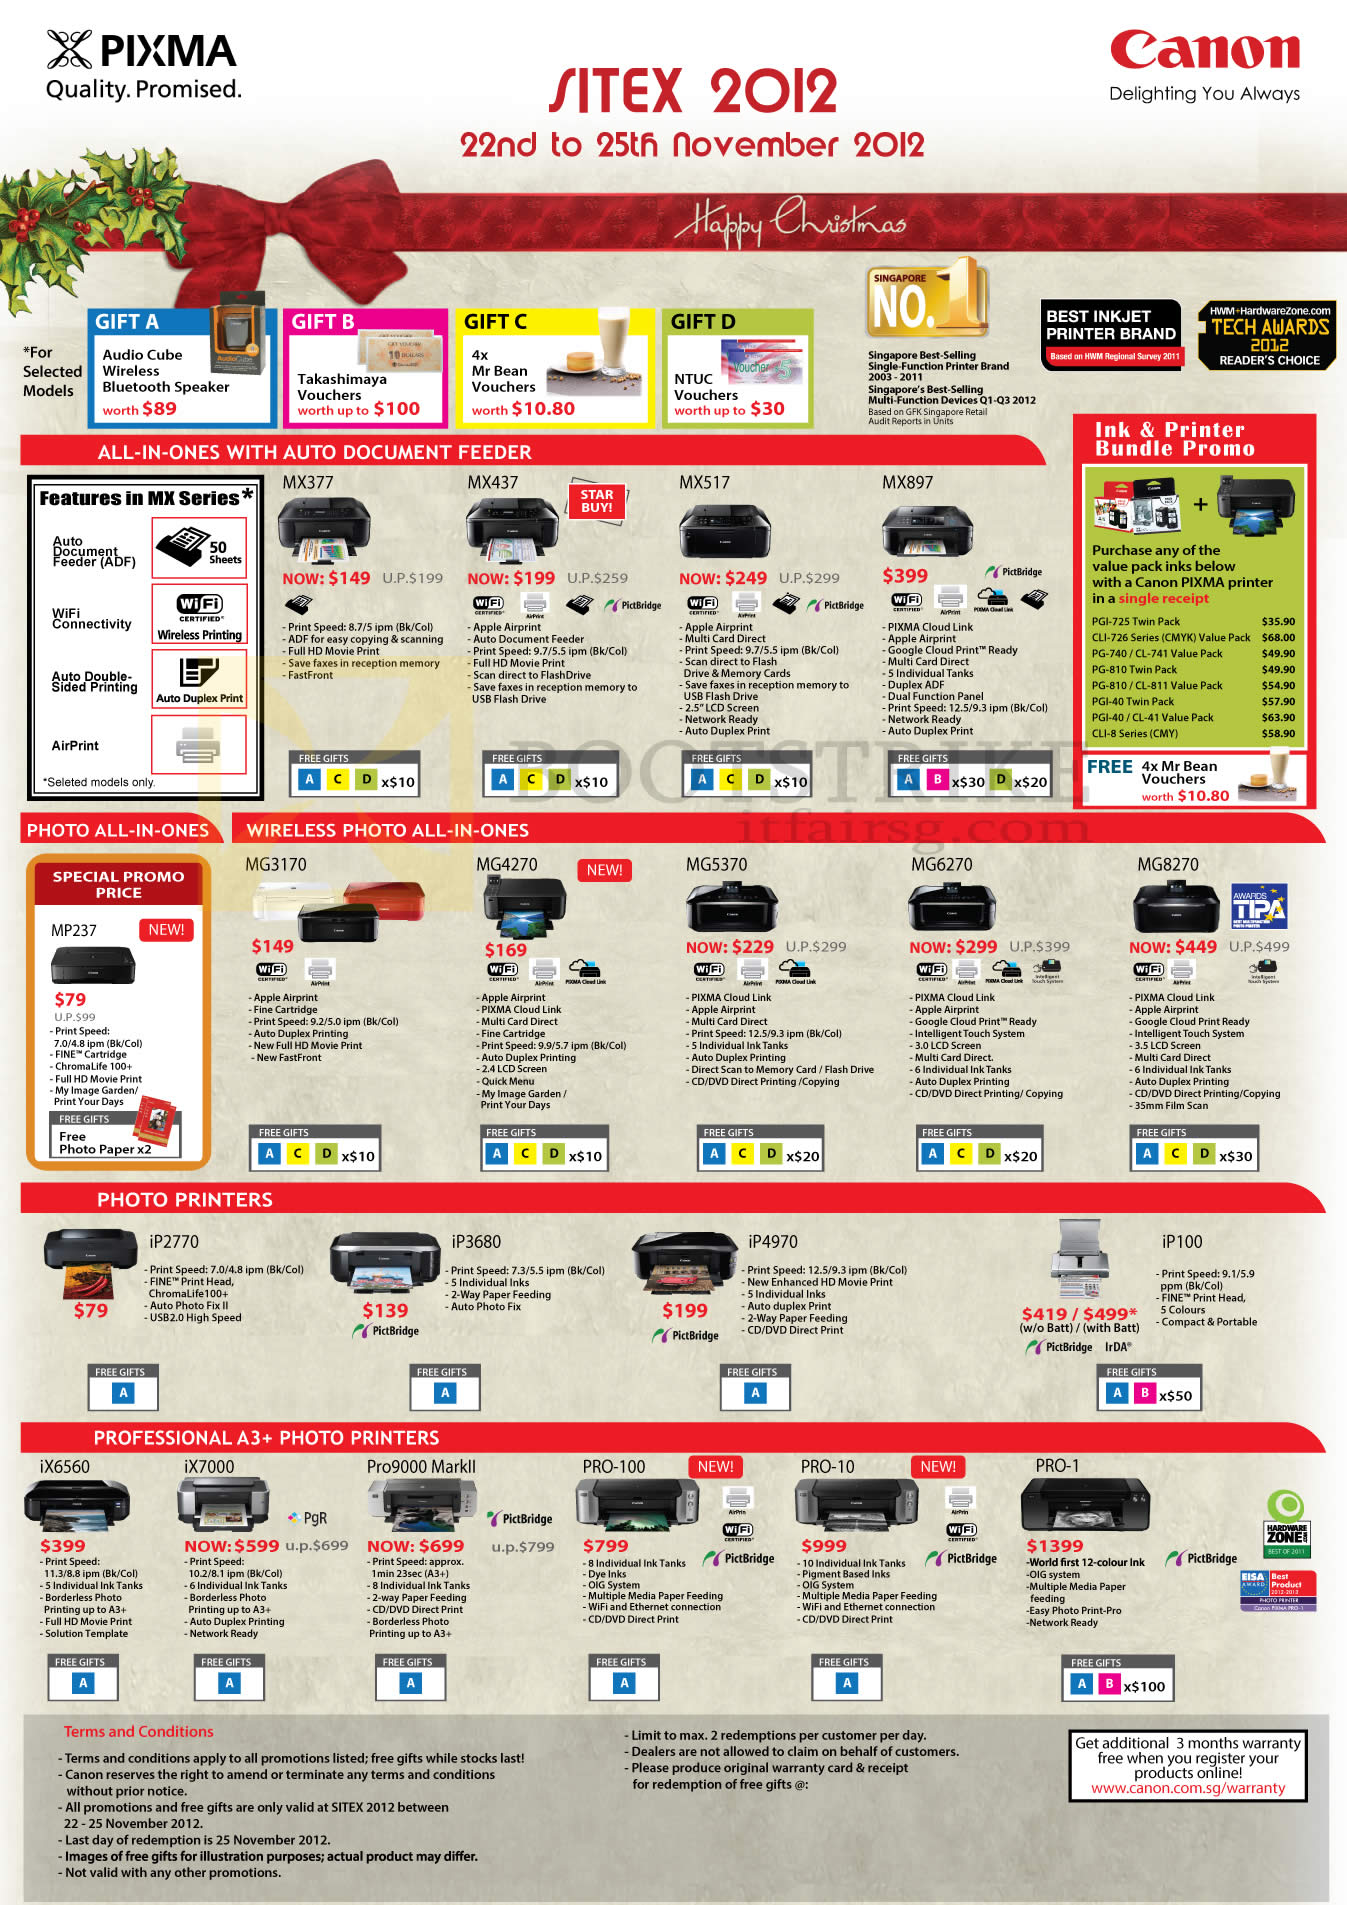 SITEX 2012 price list image brochure of Canon Printers Photo Auto Document Feeder, MX377, MX517, MX897, MG3170, MG4270, MG6270, IP2770, IP4970, IP100, IX6560, IX7000, PRO-100, PRO-10, PRO-1